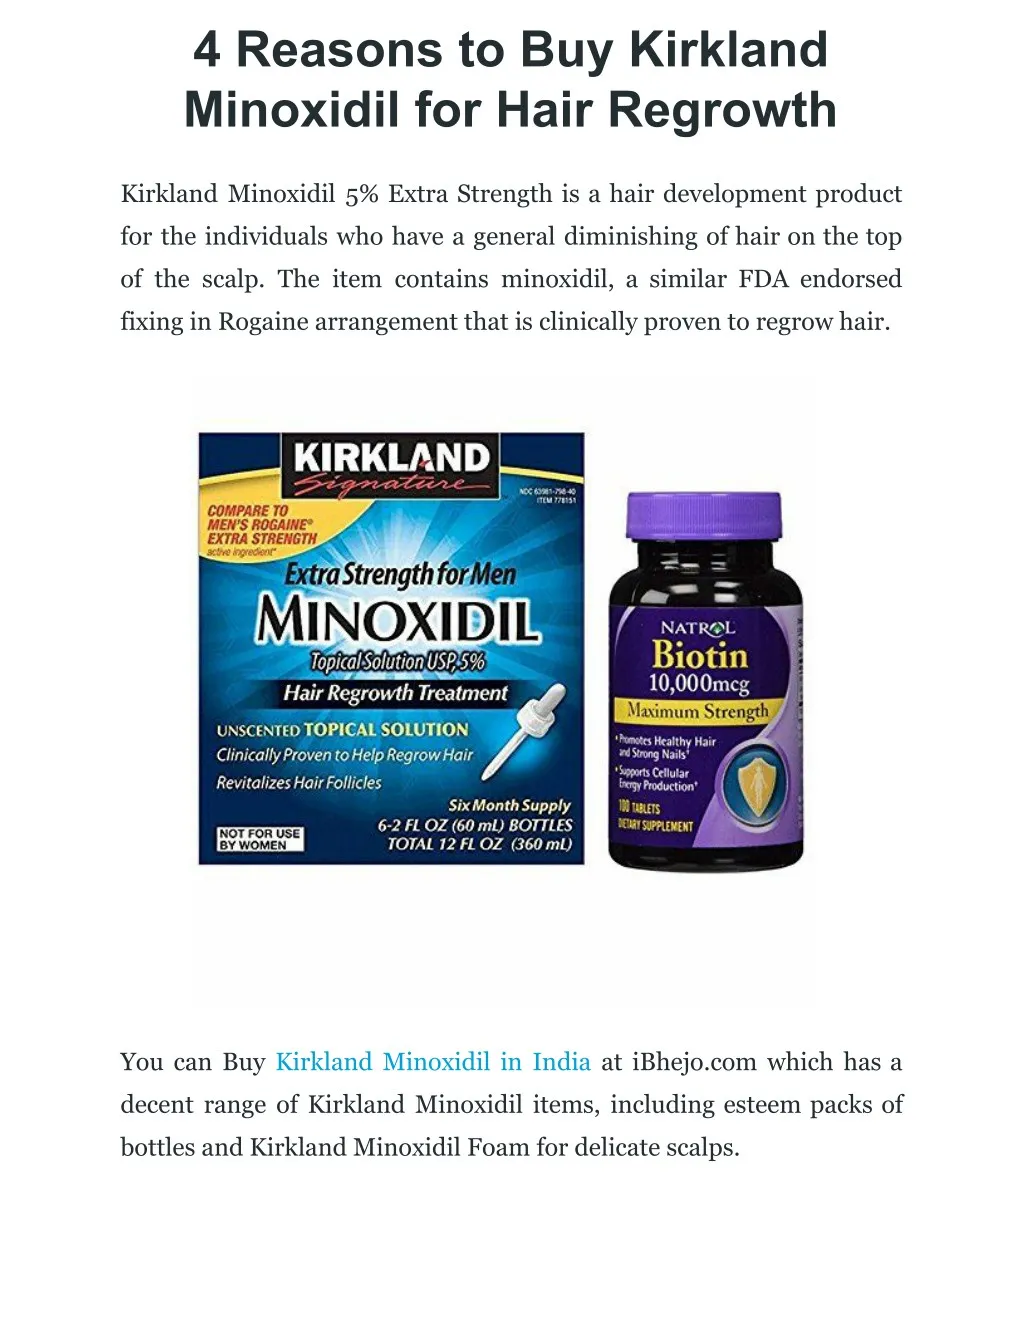 4 reasons to buy kirkland minoxidil for hair